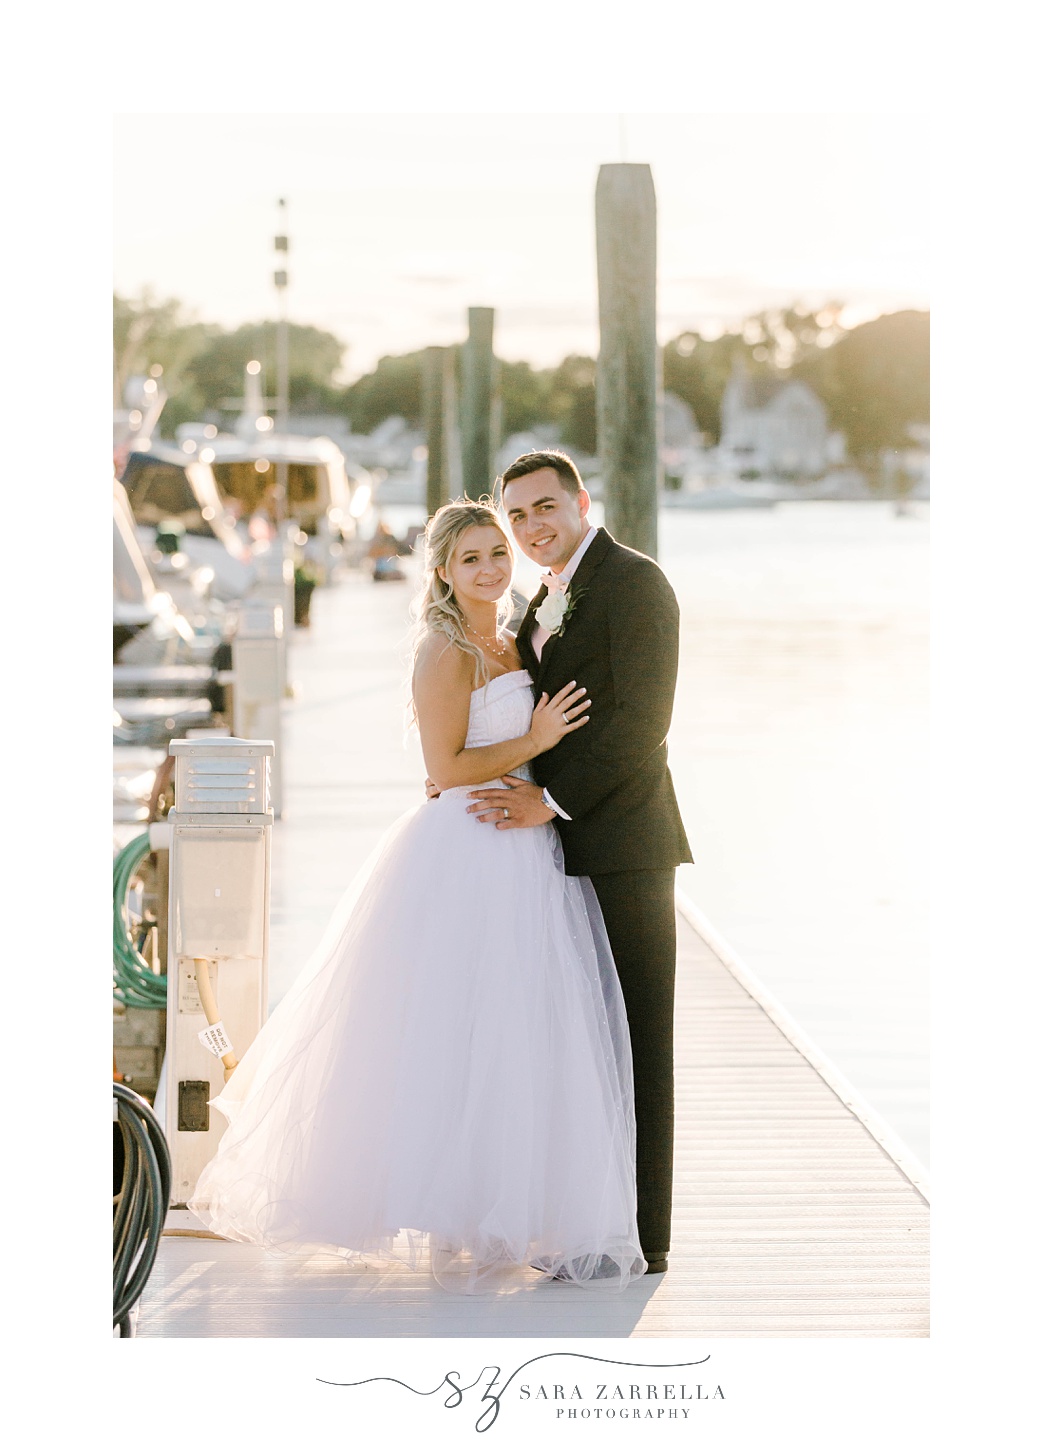 newlyweds hug on dock at Harbor Lights